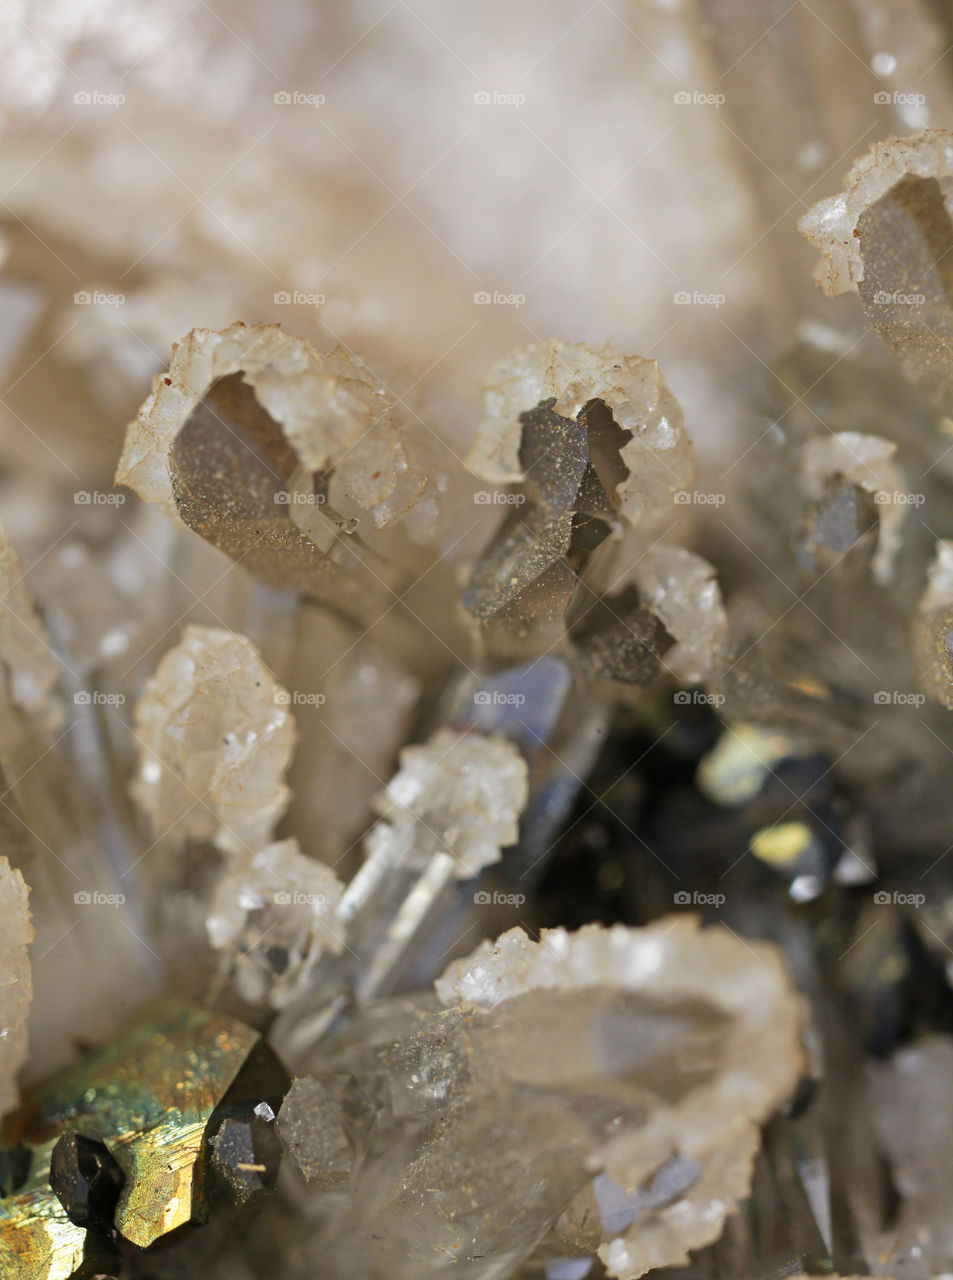 Crystals close up